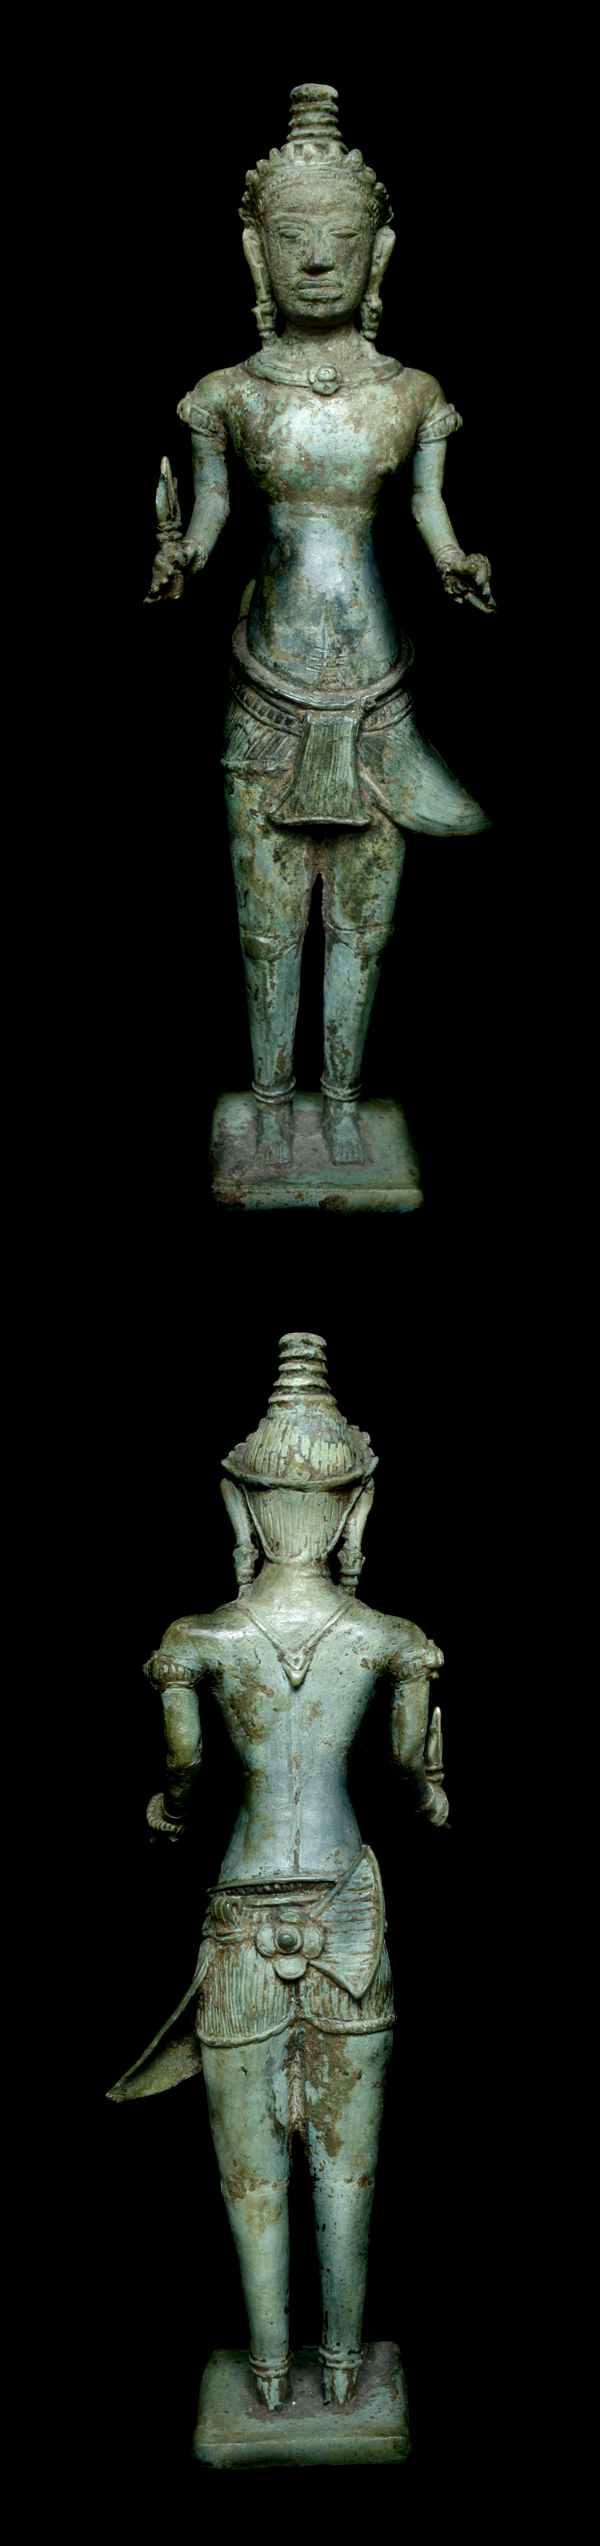 Extremely Rare 12C Khmer Sculpture #AL.018